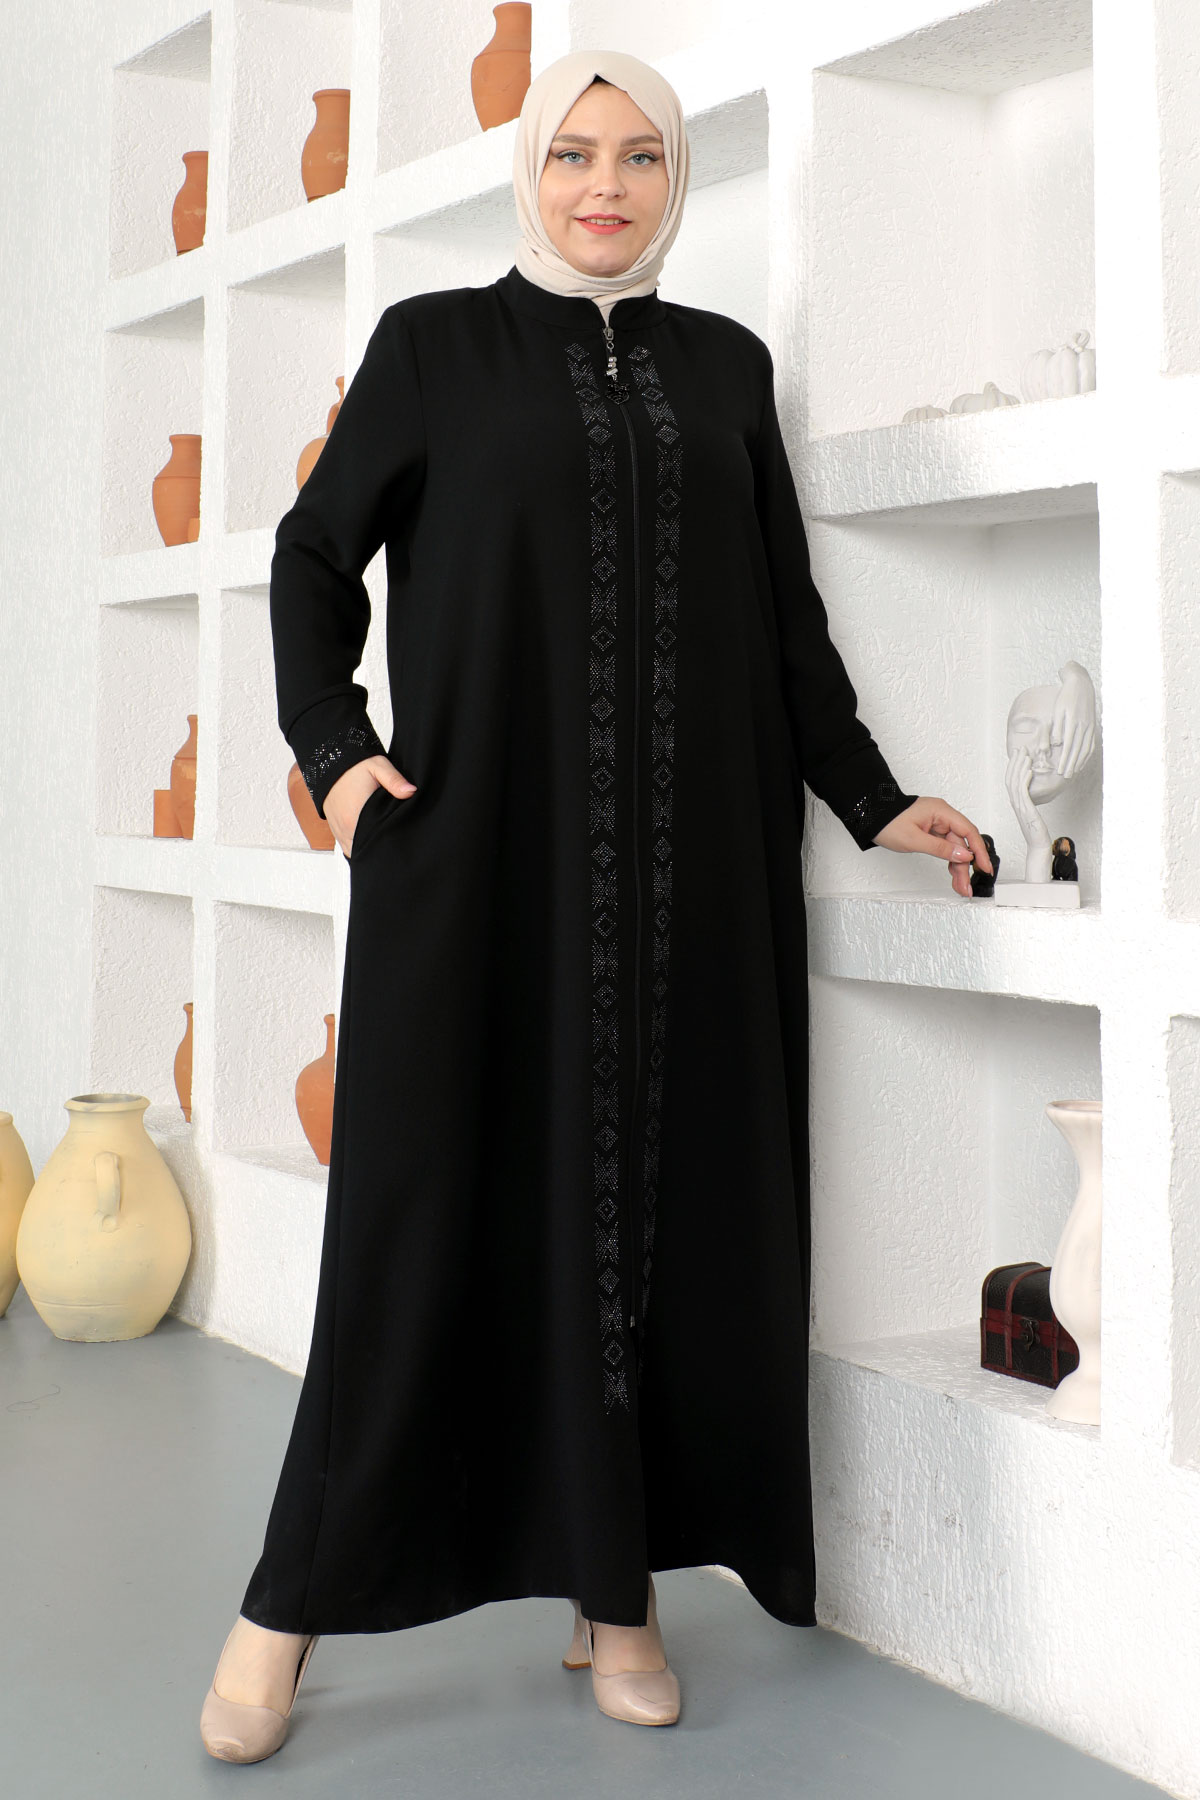 Pul Inlaid Hijab Abayas TSD230330 Black